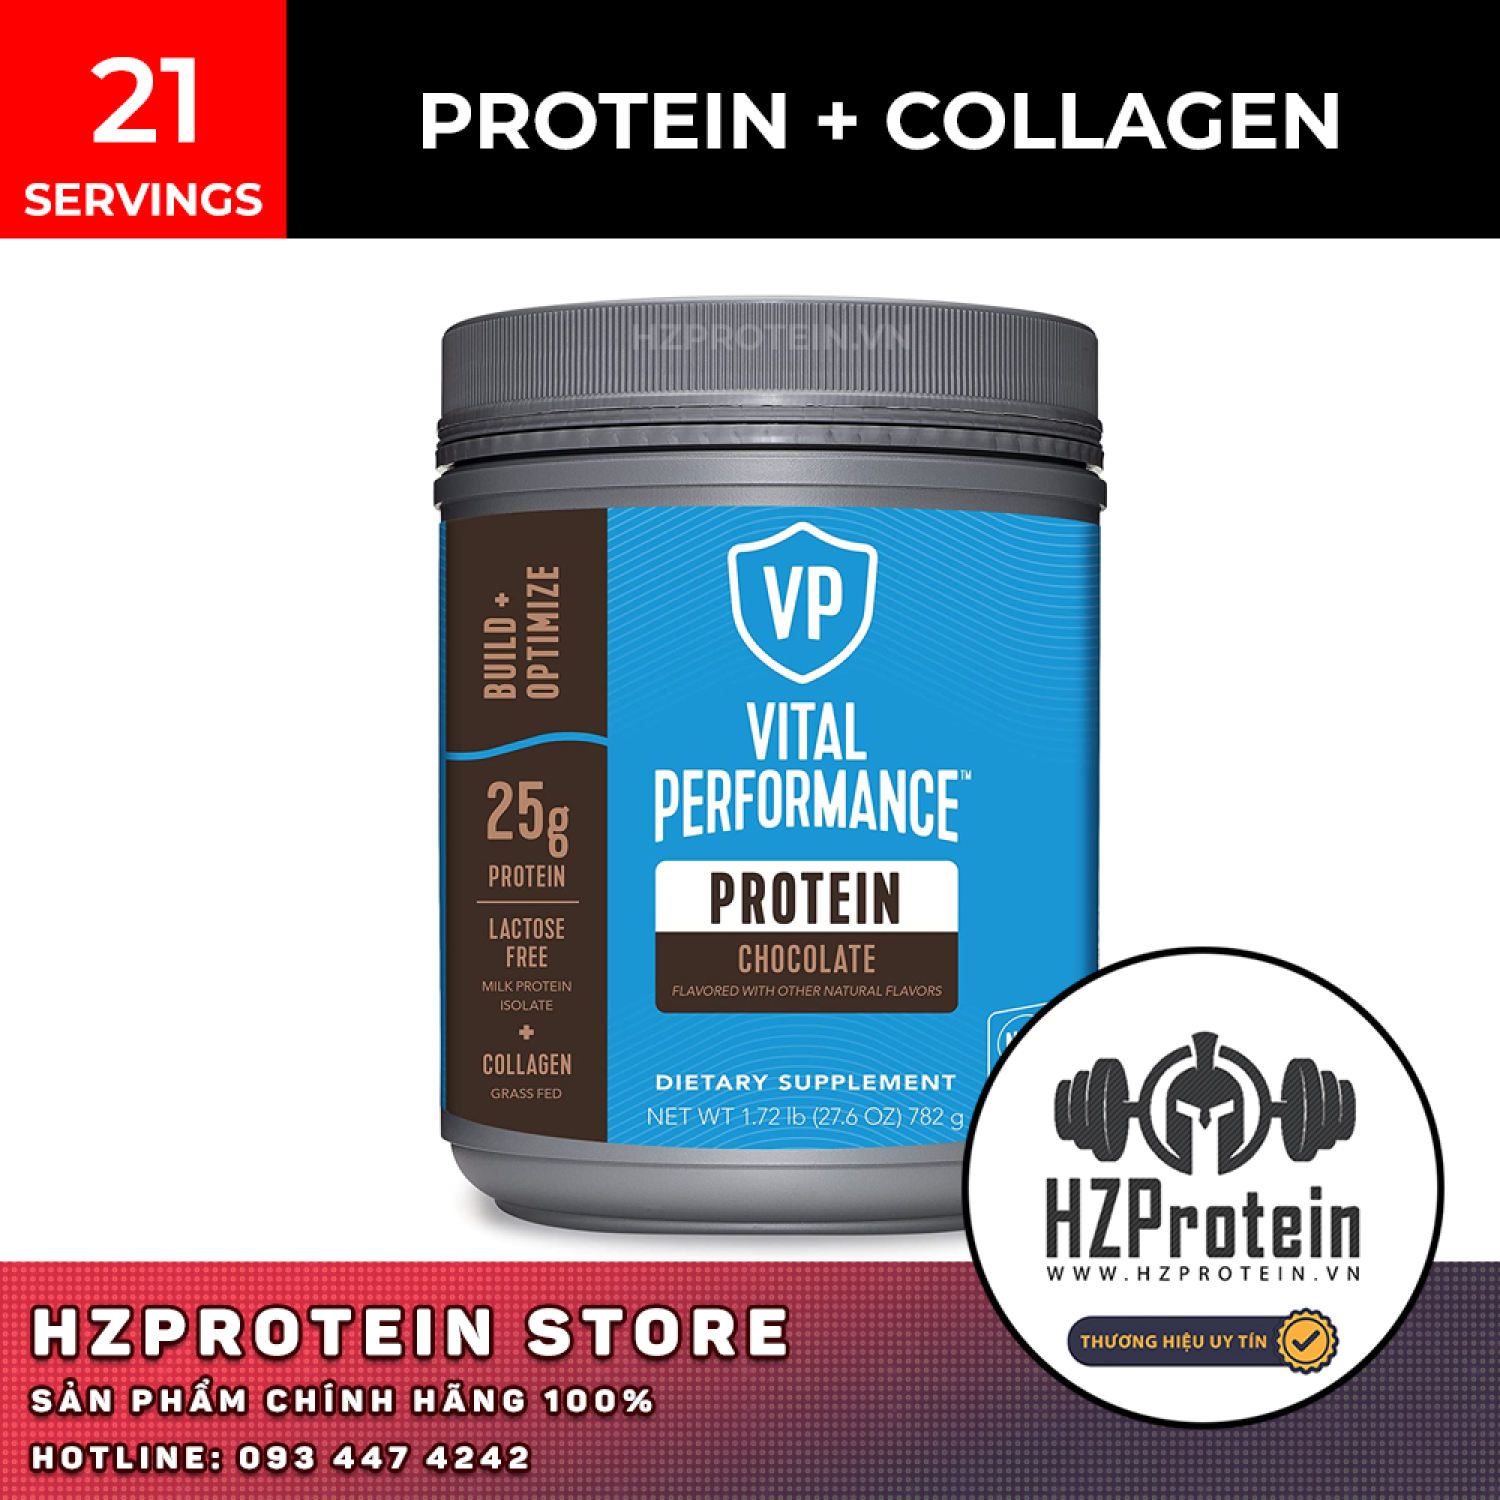 Vital Protein Performance - Bổ sung Protein và Collagen Peptides cho hiệu